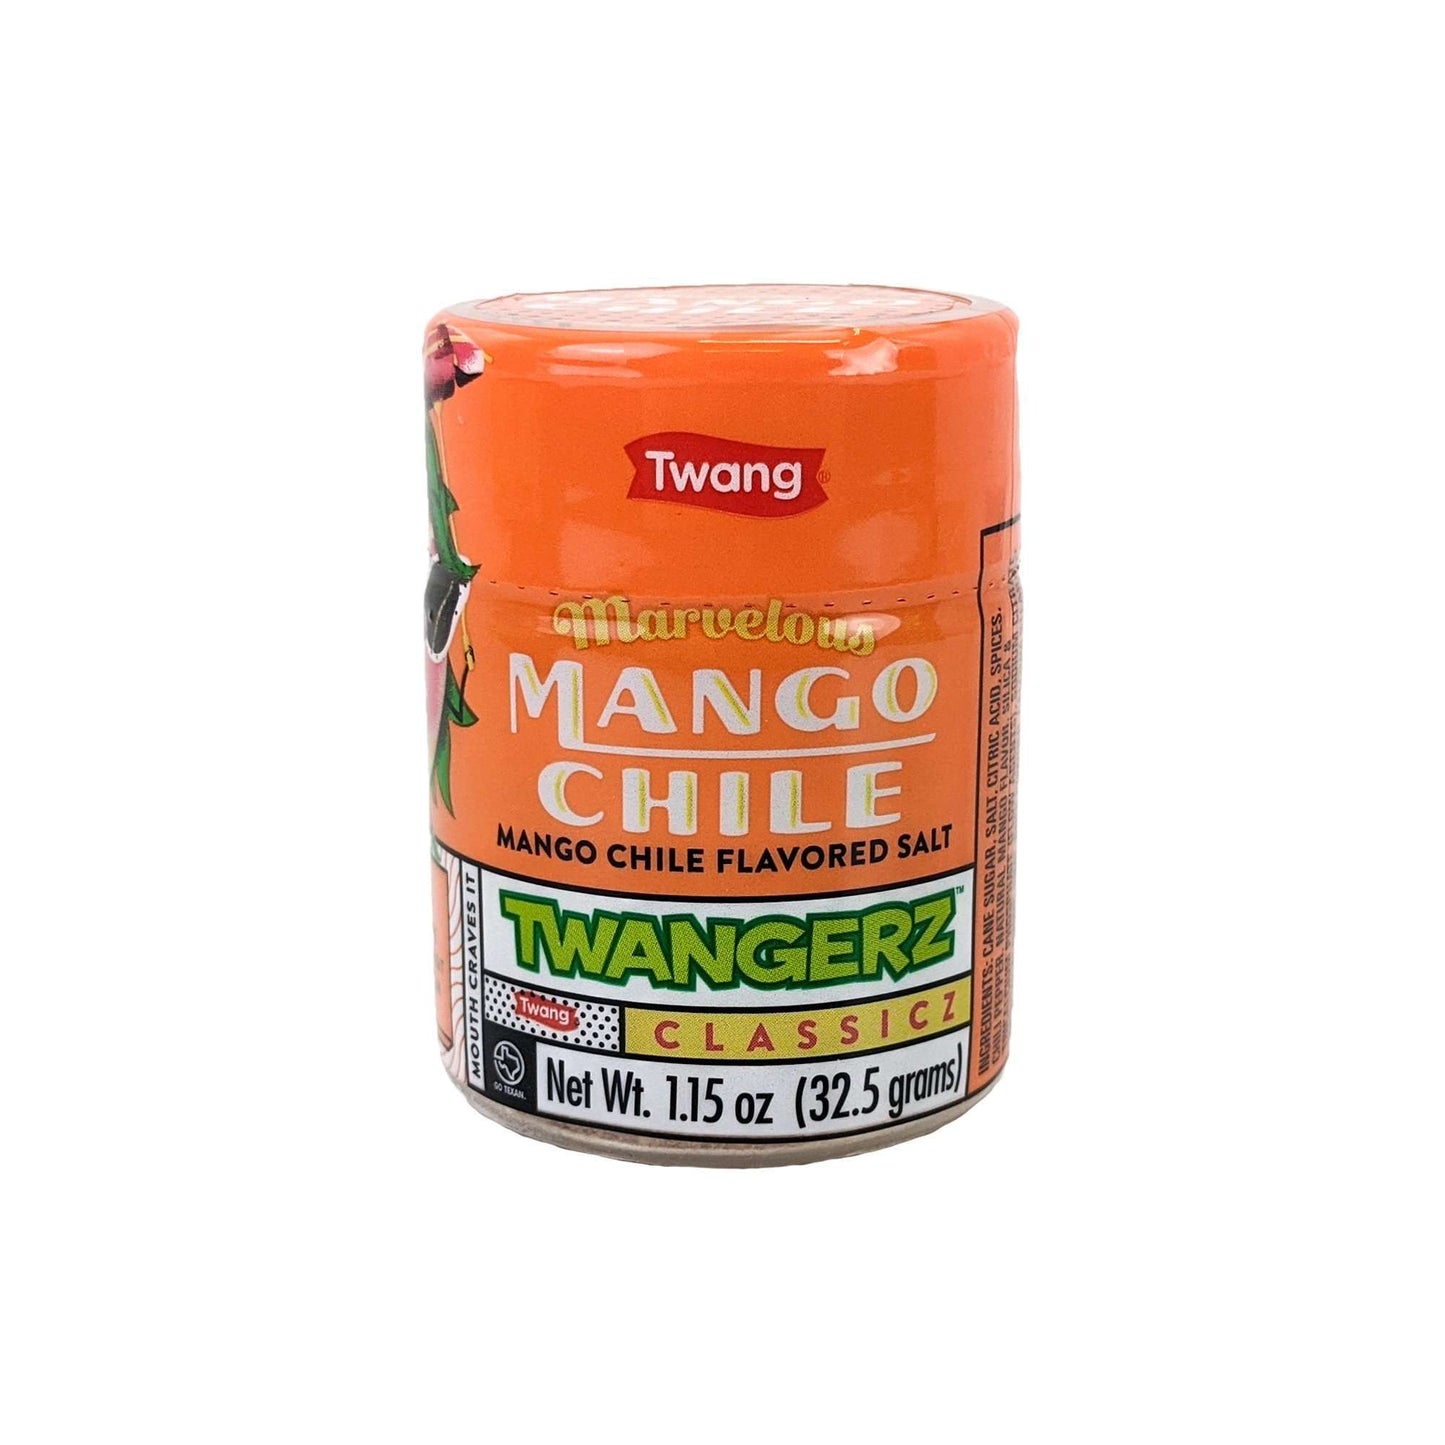 Mango Chile Flavor Twang Twangerz Snack Topping, 1 Shaker